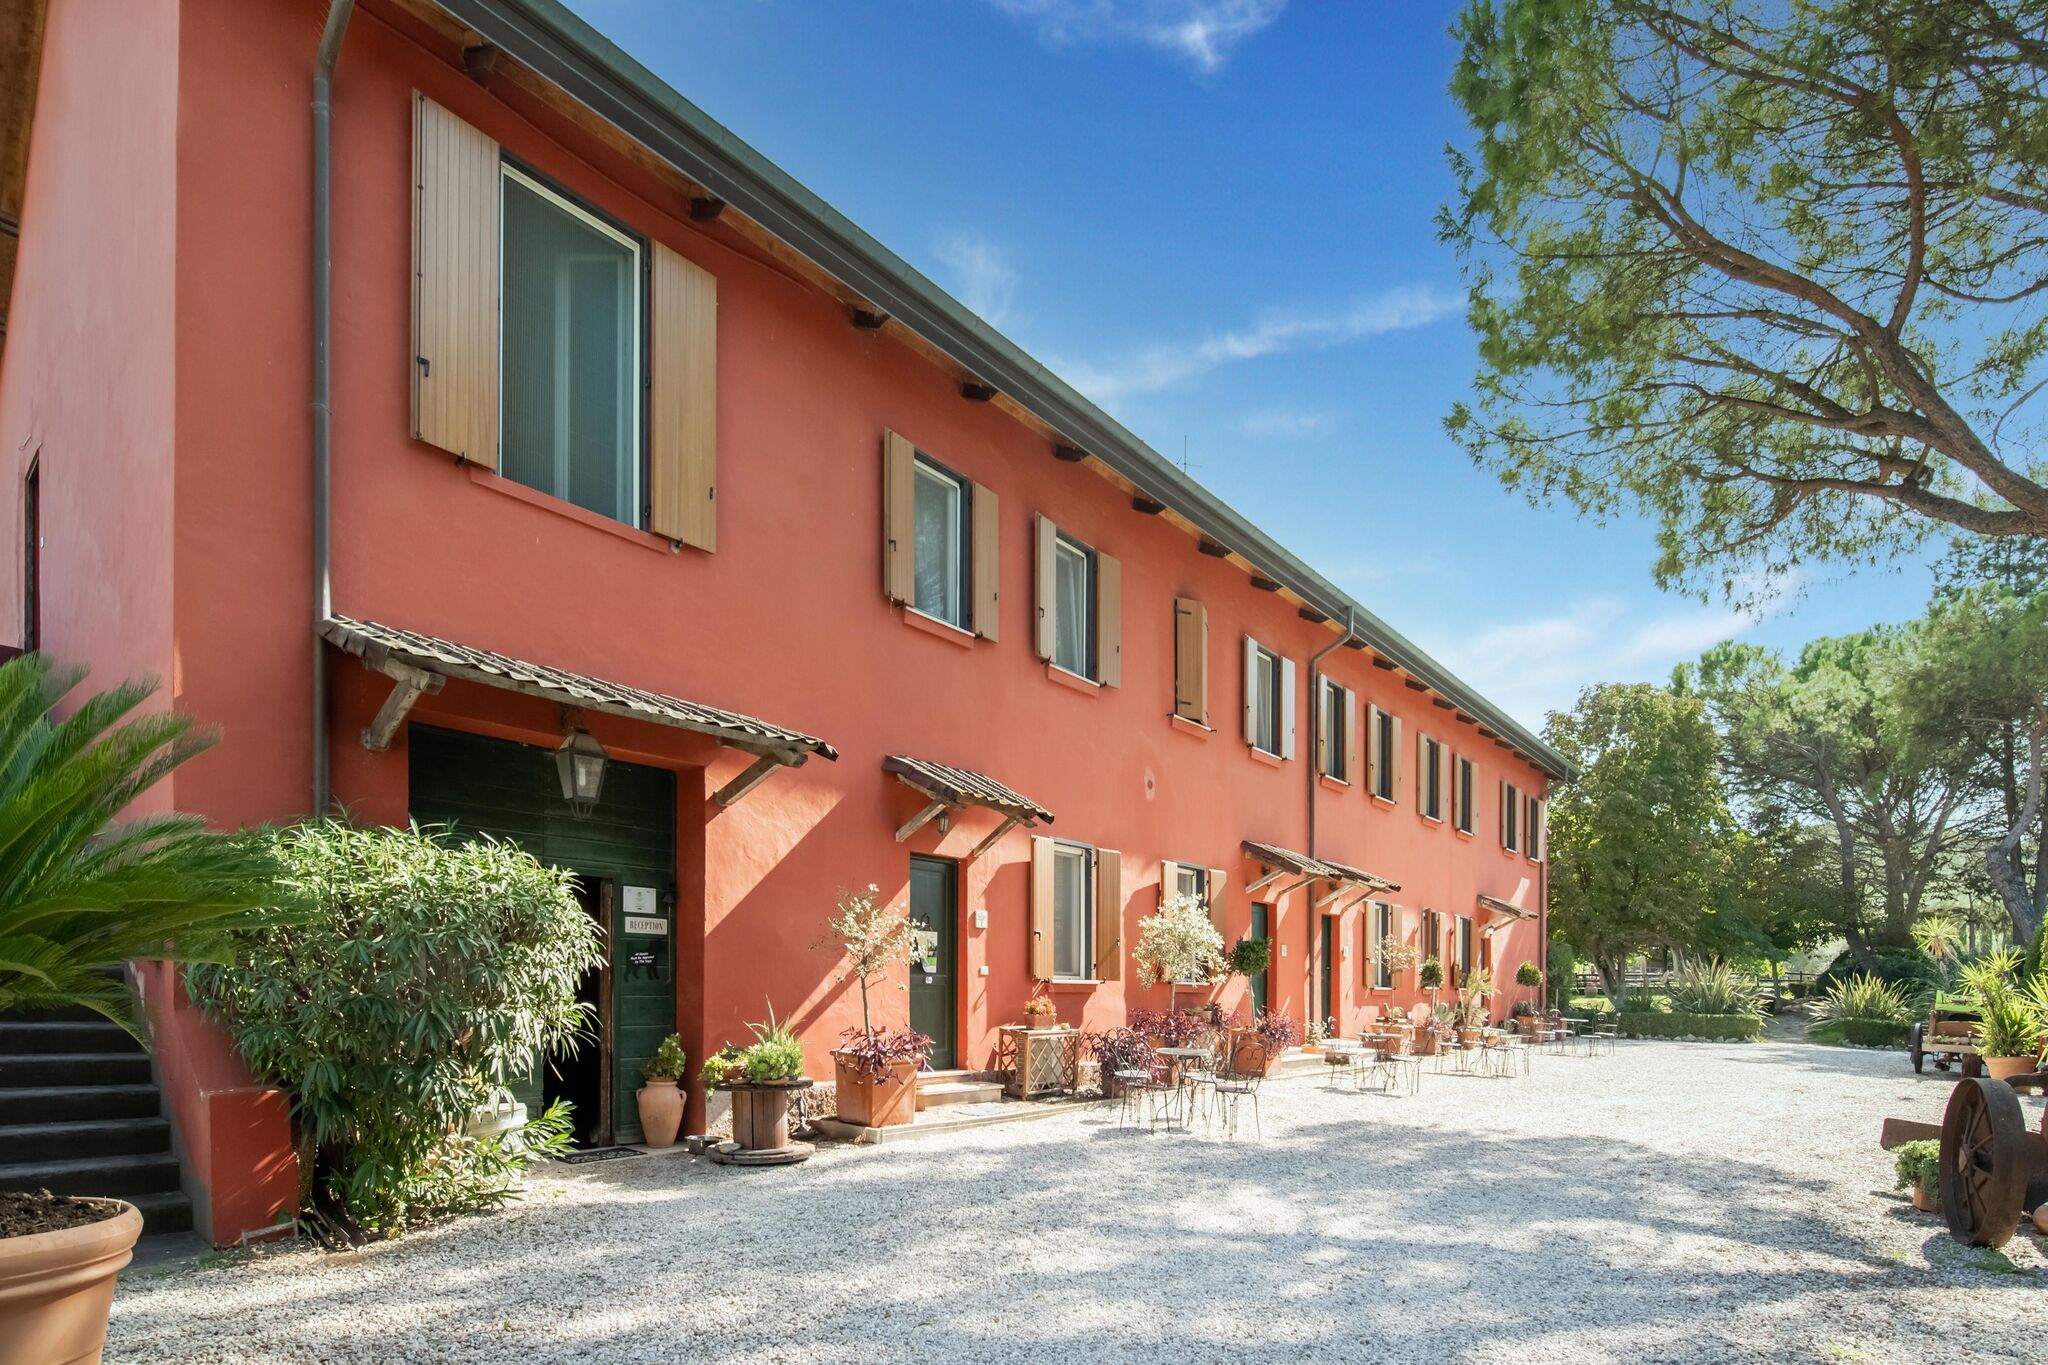 Apartment on an estate near Rome